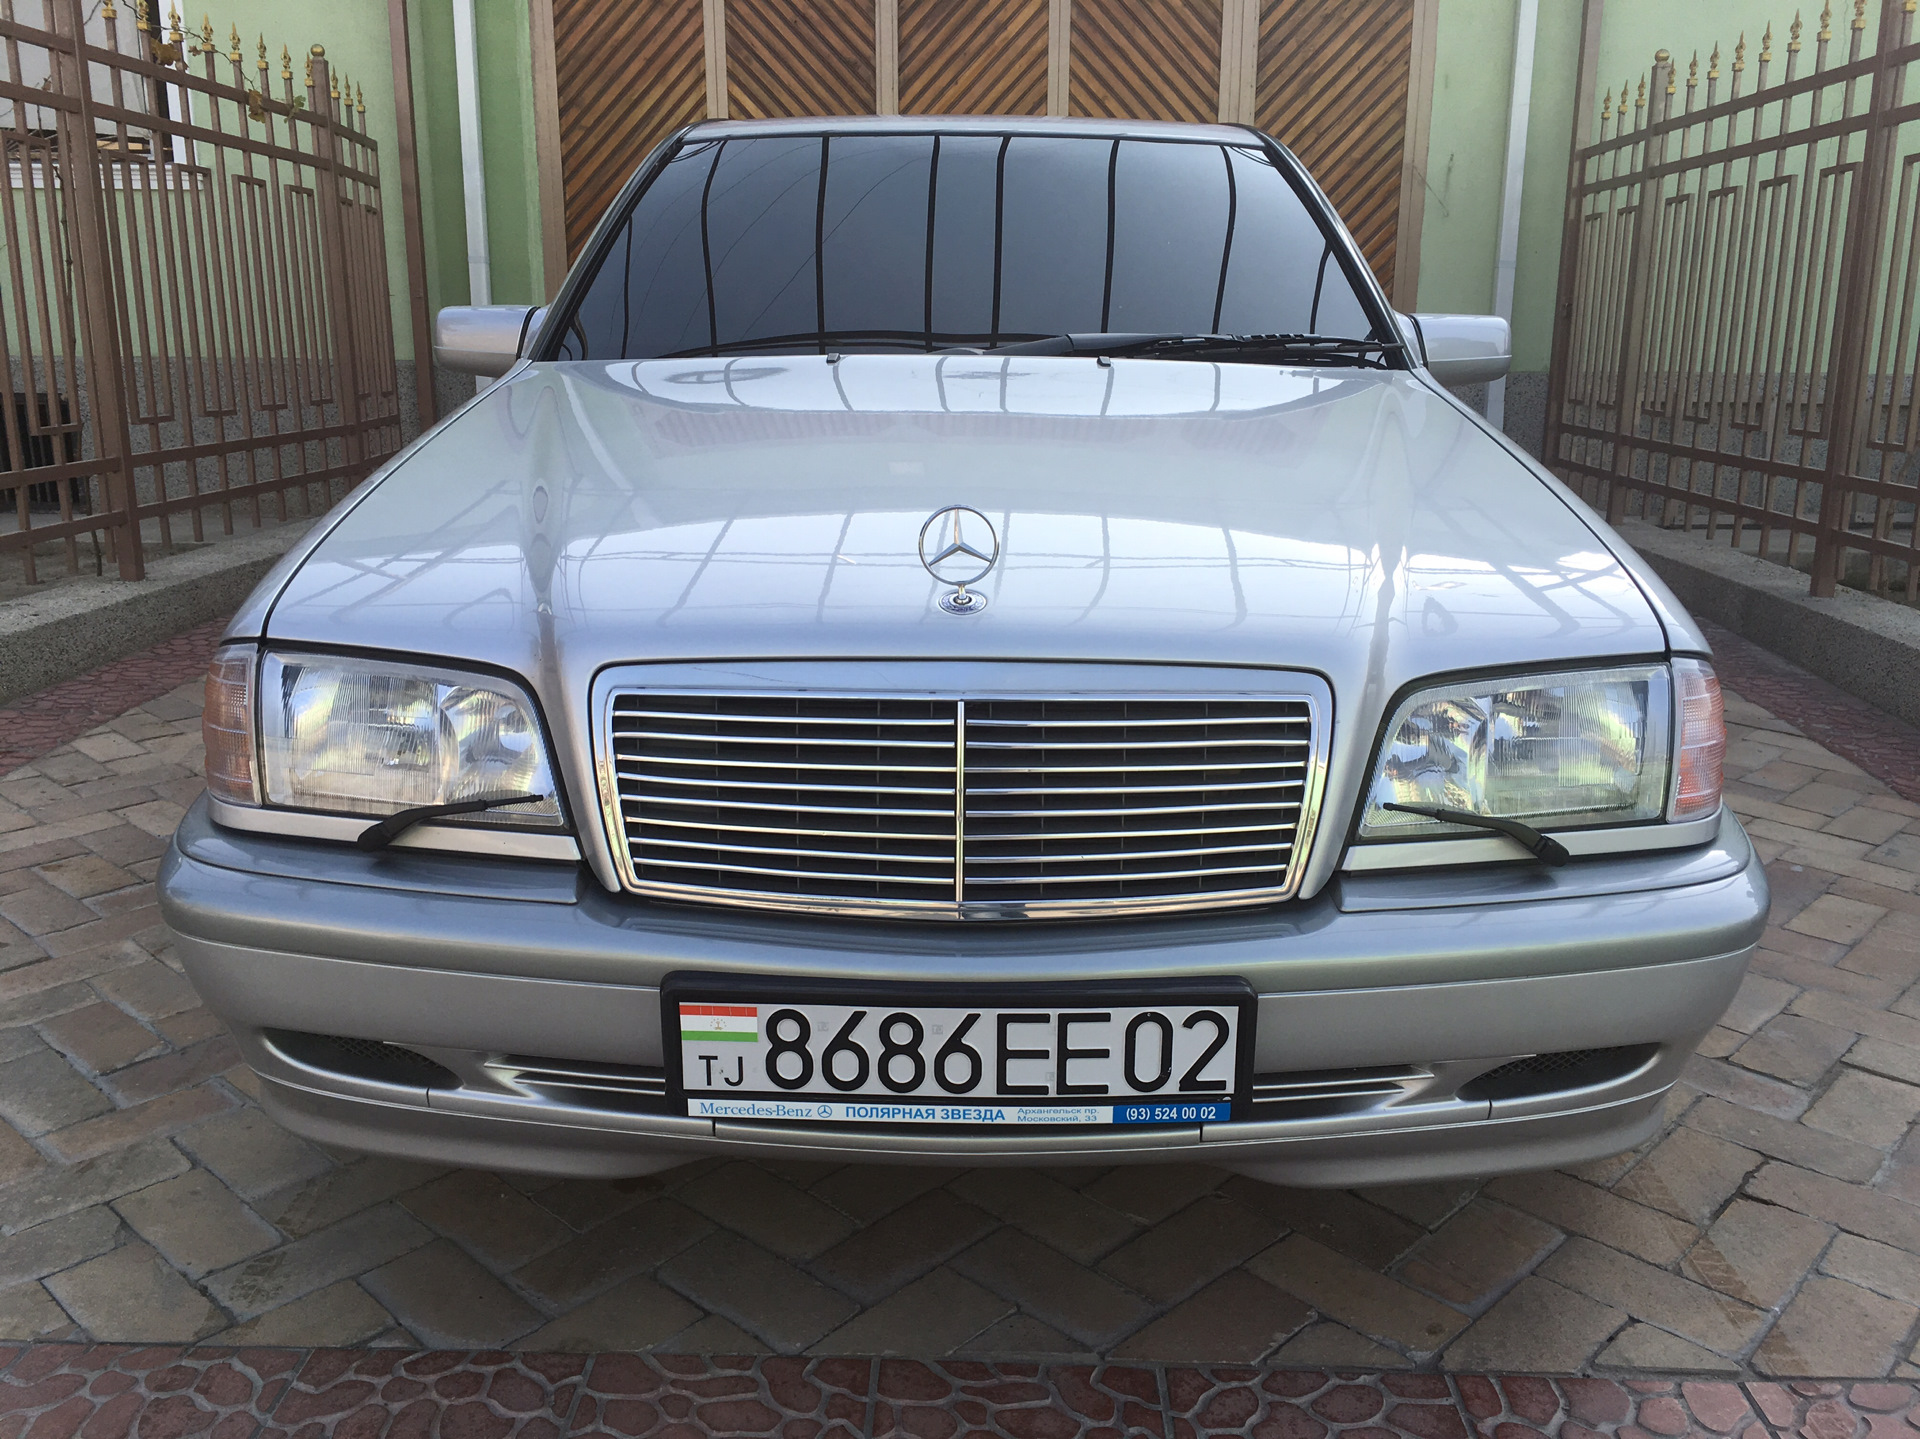 Купить мерседес худжанде. Мерседес сечка Худжанд. Mercedes Benz w202 1999 Таджикистан. Мерседес сечка в Таджикистан. Мерседес Бенц 202 в Таджикистан.